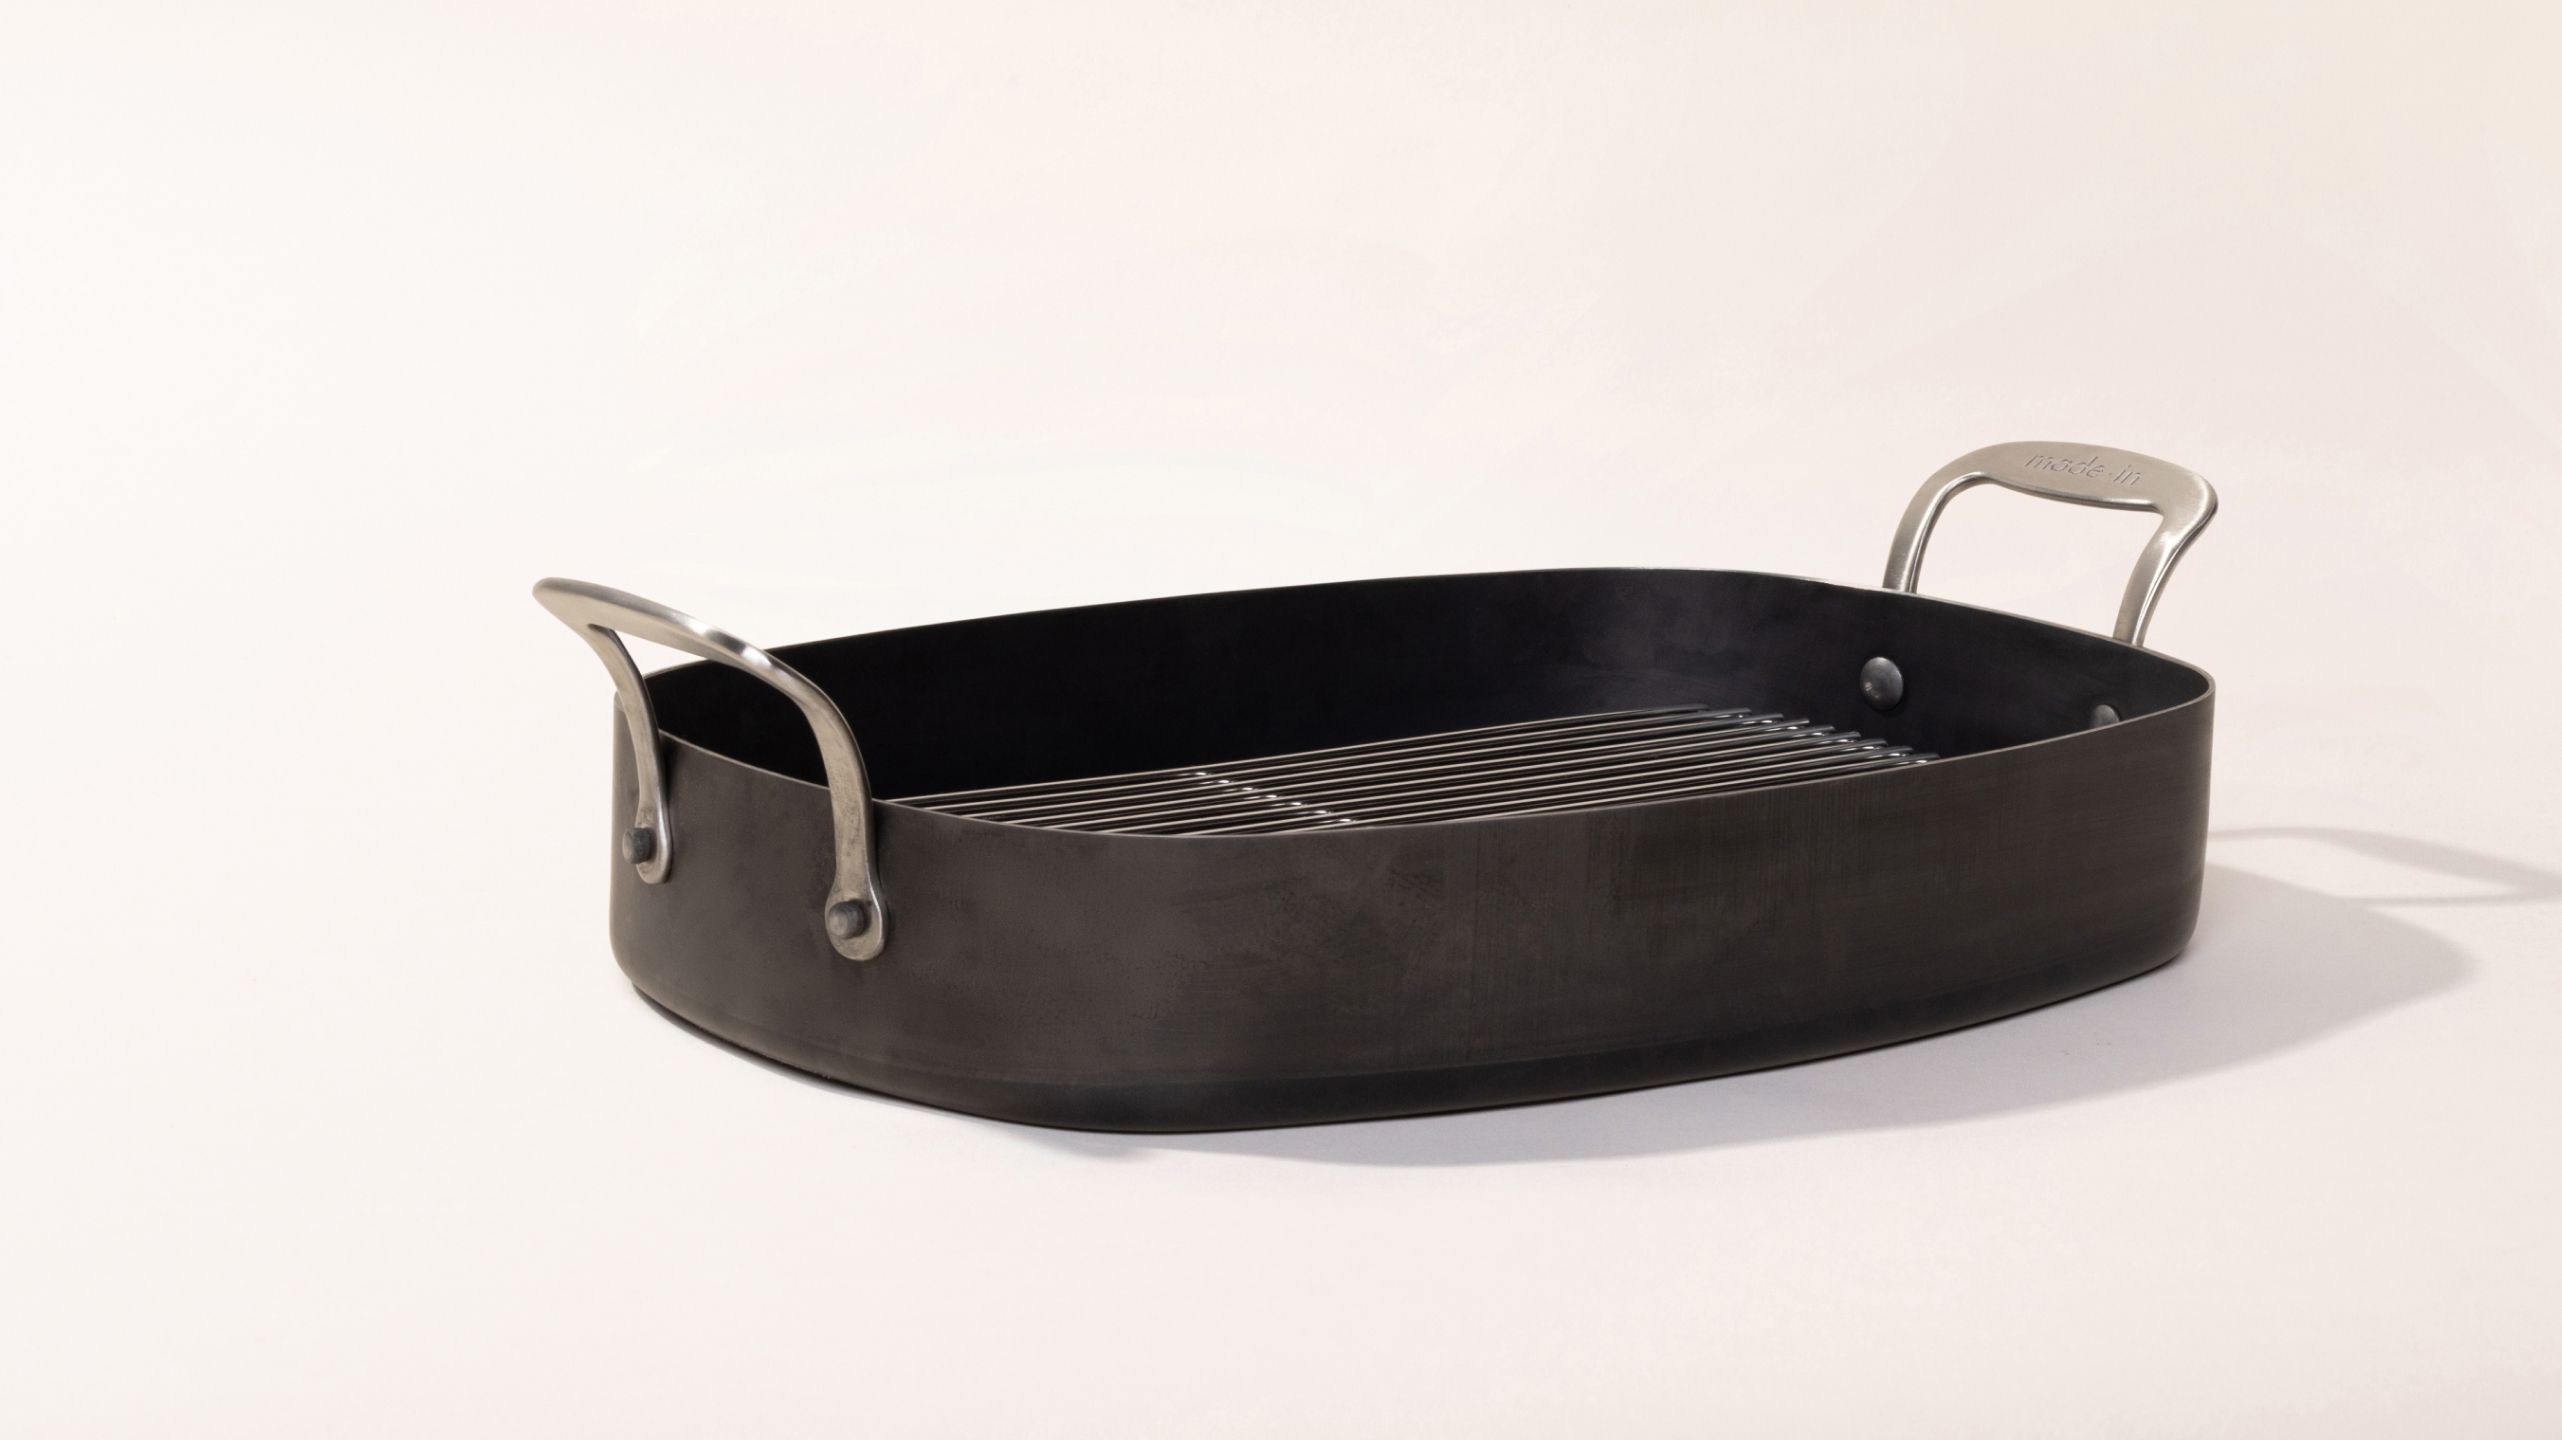 Premium Stainless Steel Roasting Pan with Rack, 18 inch